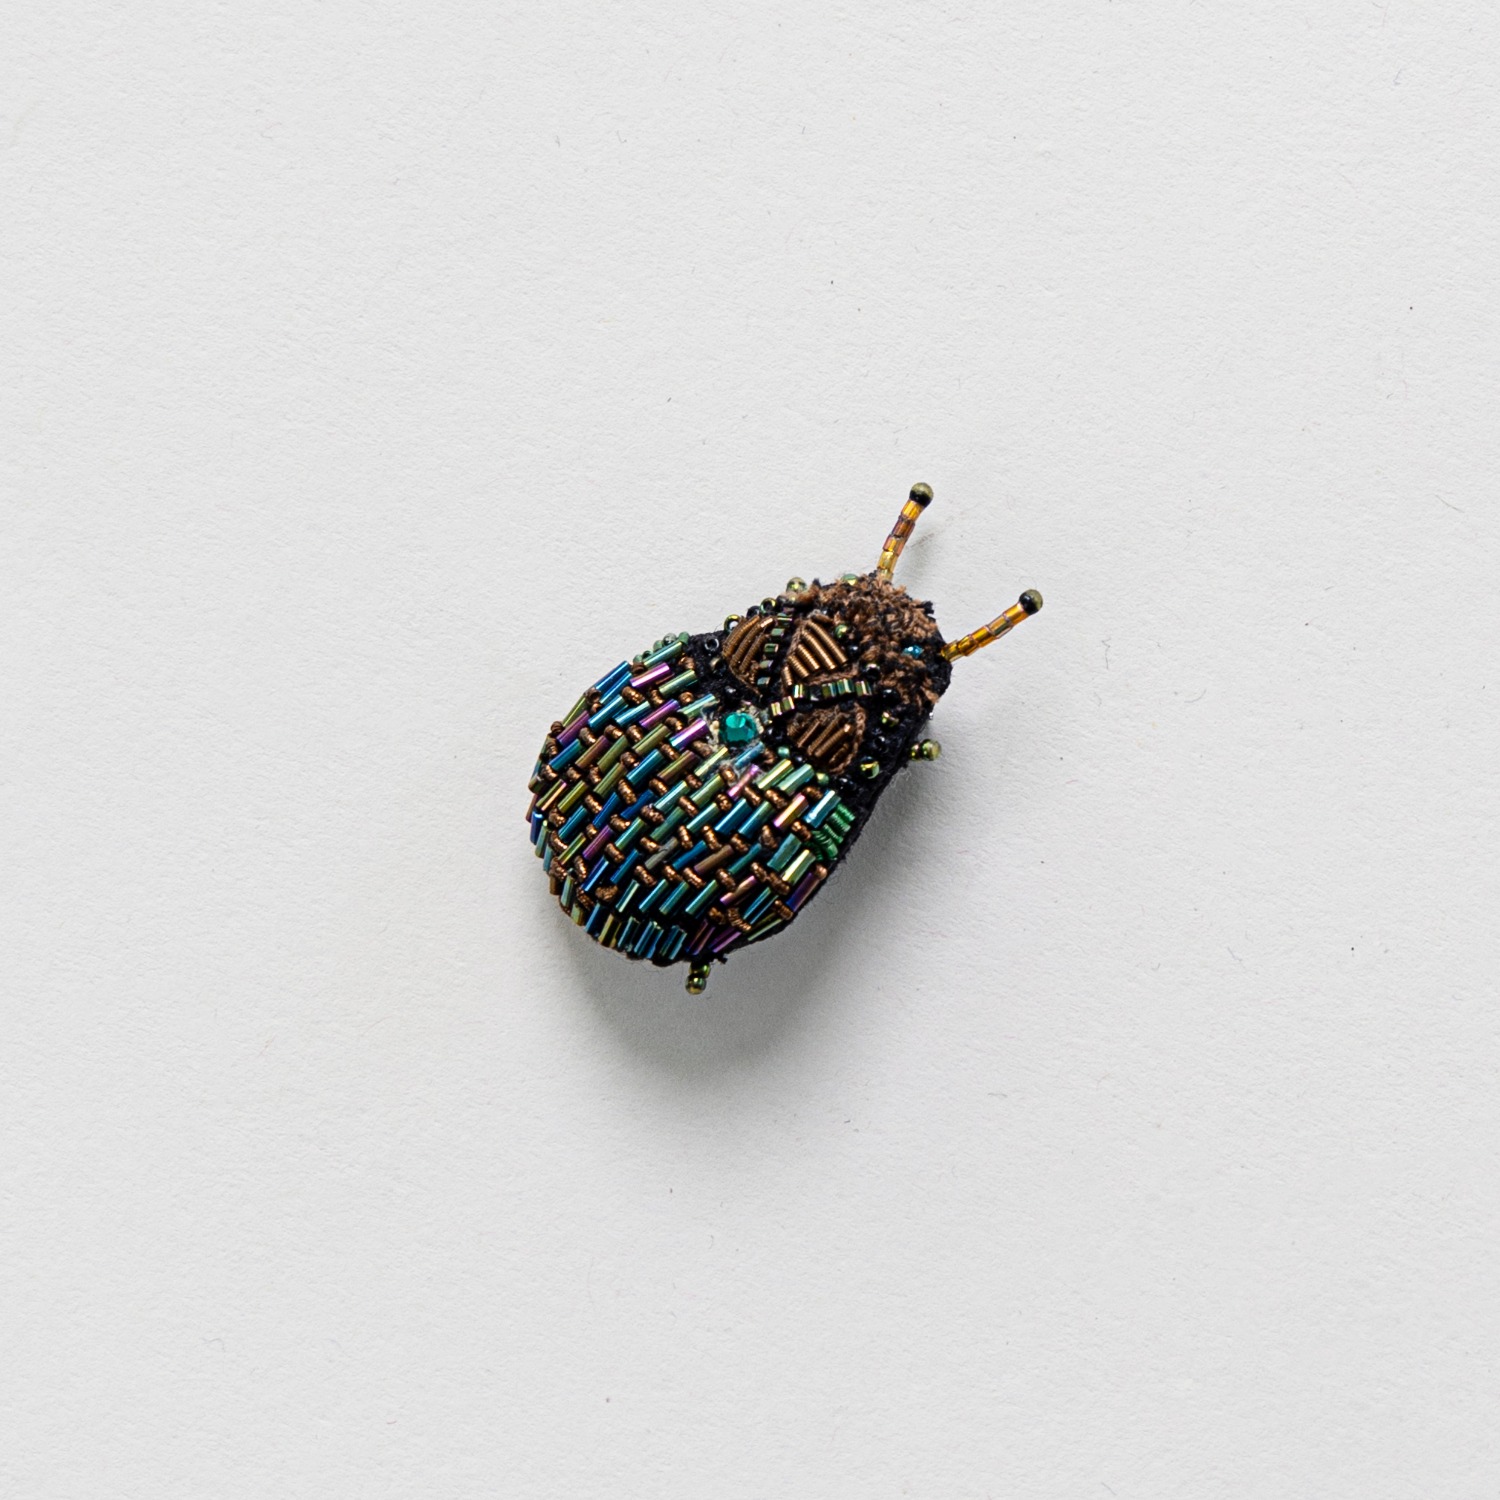 TROVELORE Scarab Beetle Brooch Pin